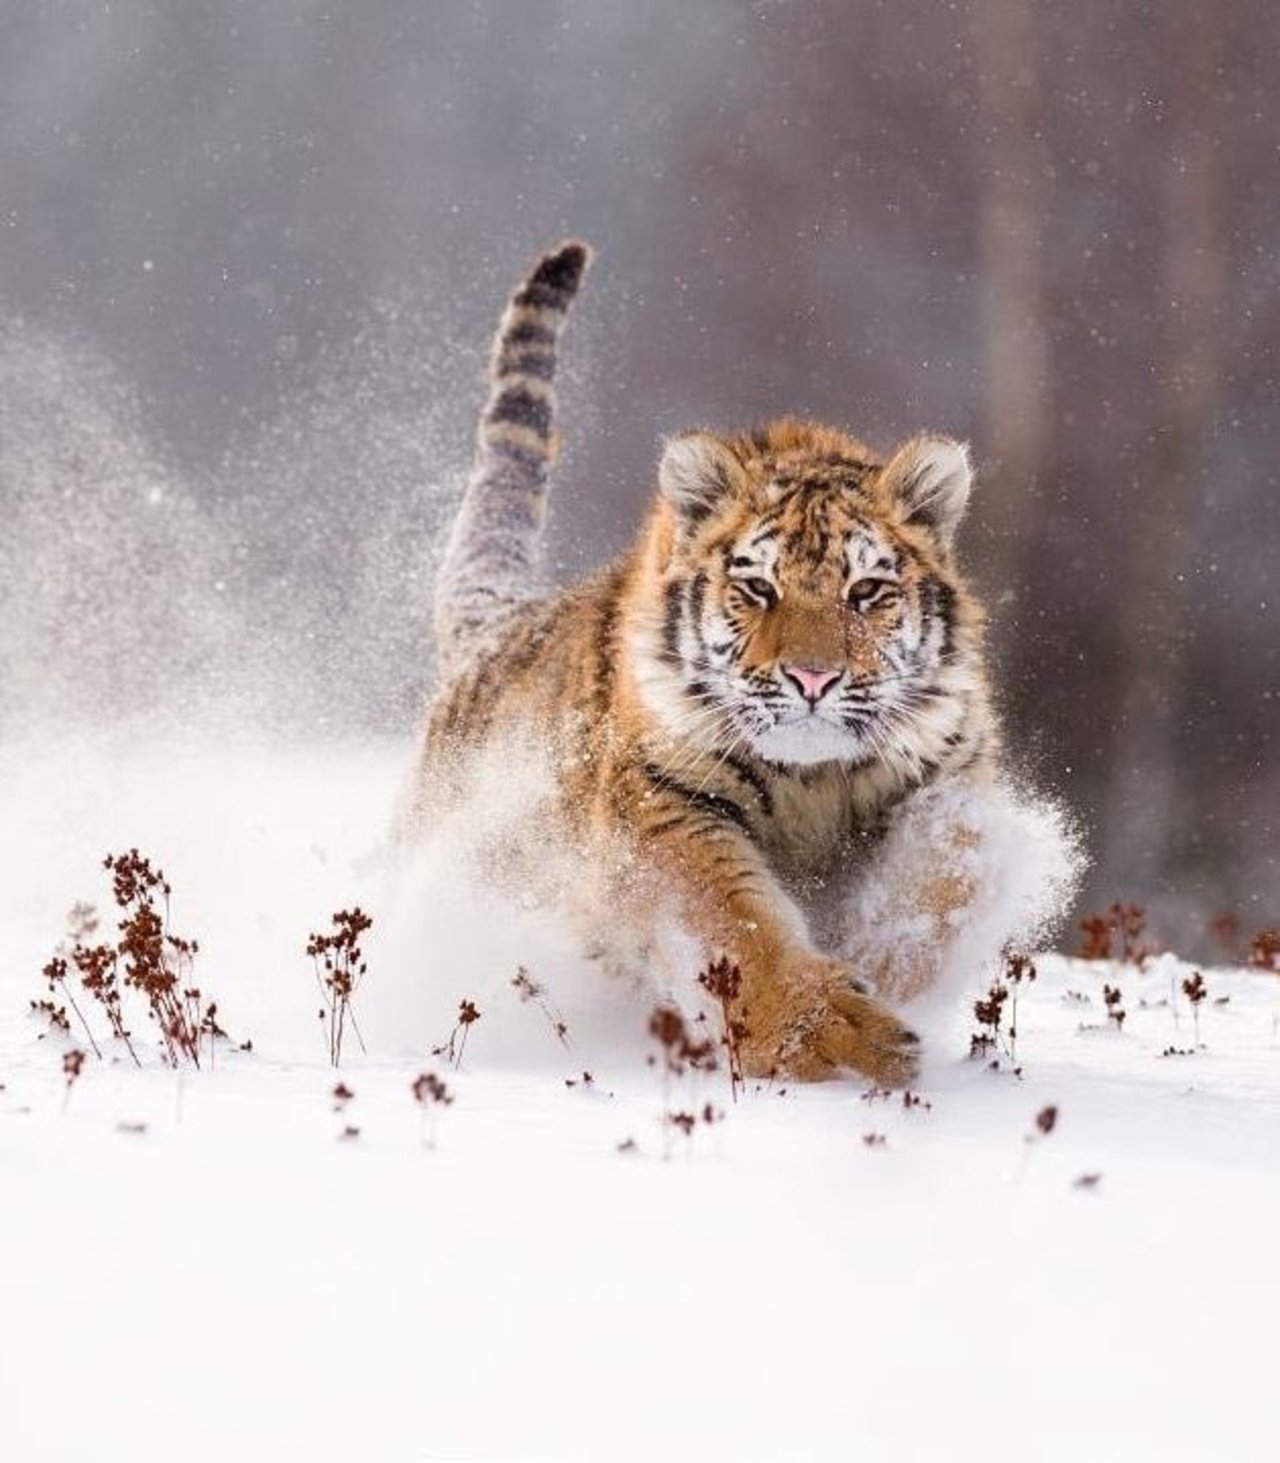 RT @arasaucedo24: ~Siberian tiger ... imposing!      By: Jan Pelcman#wildlife  https://t.co/yOOKr3lJBf